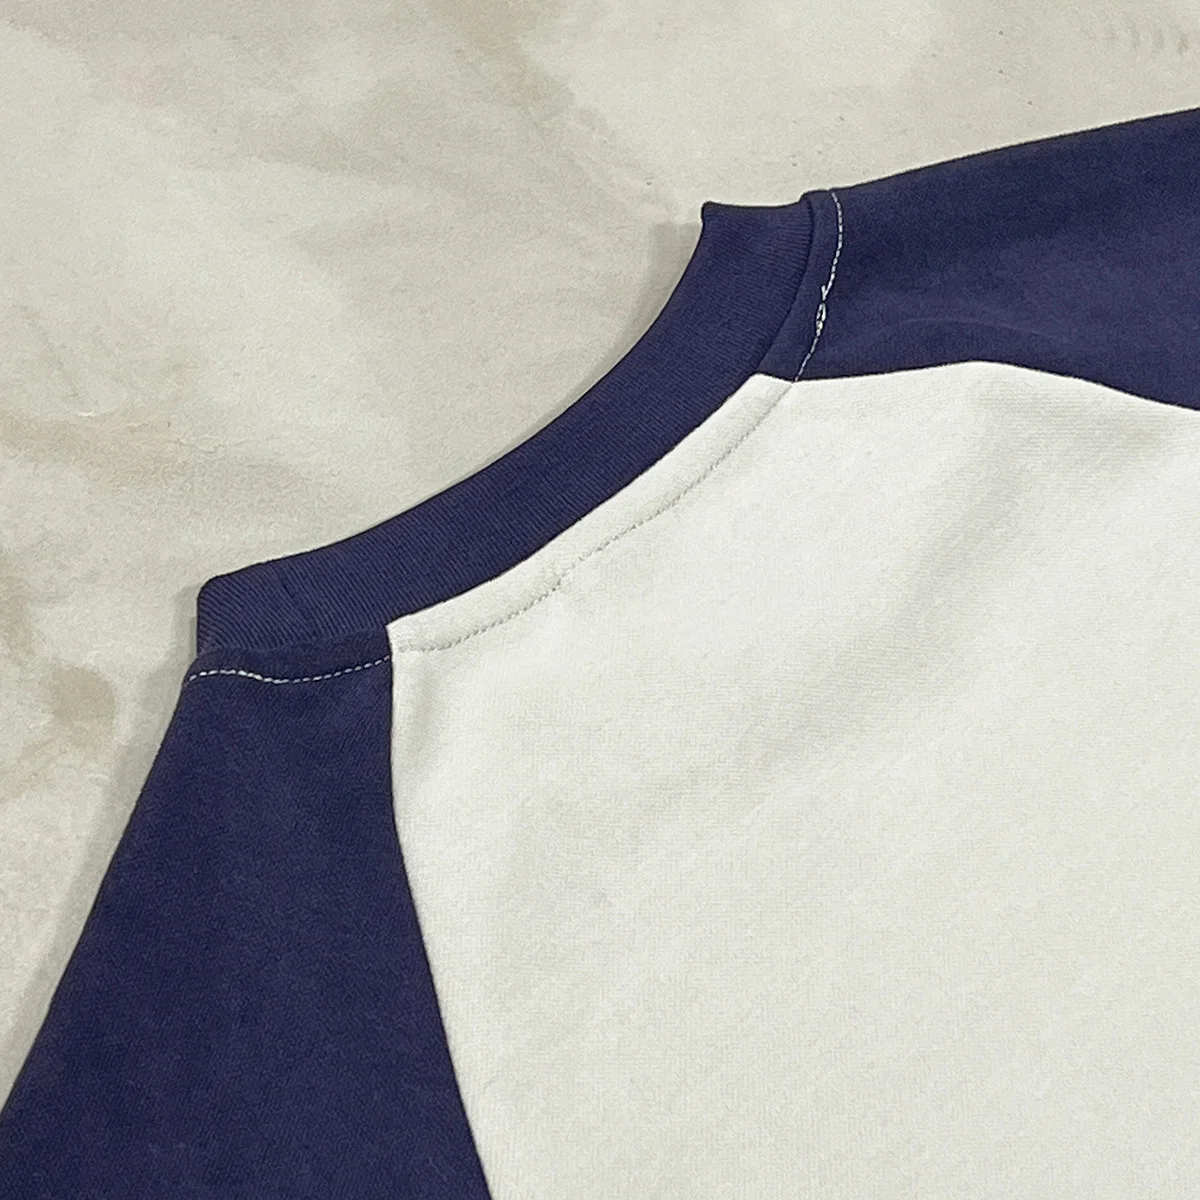 Custom Wholesale Yoga Sport Plain Pullover Short Crop Top Casual Long Sleeve Women T Shirt